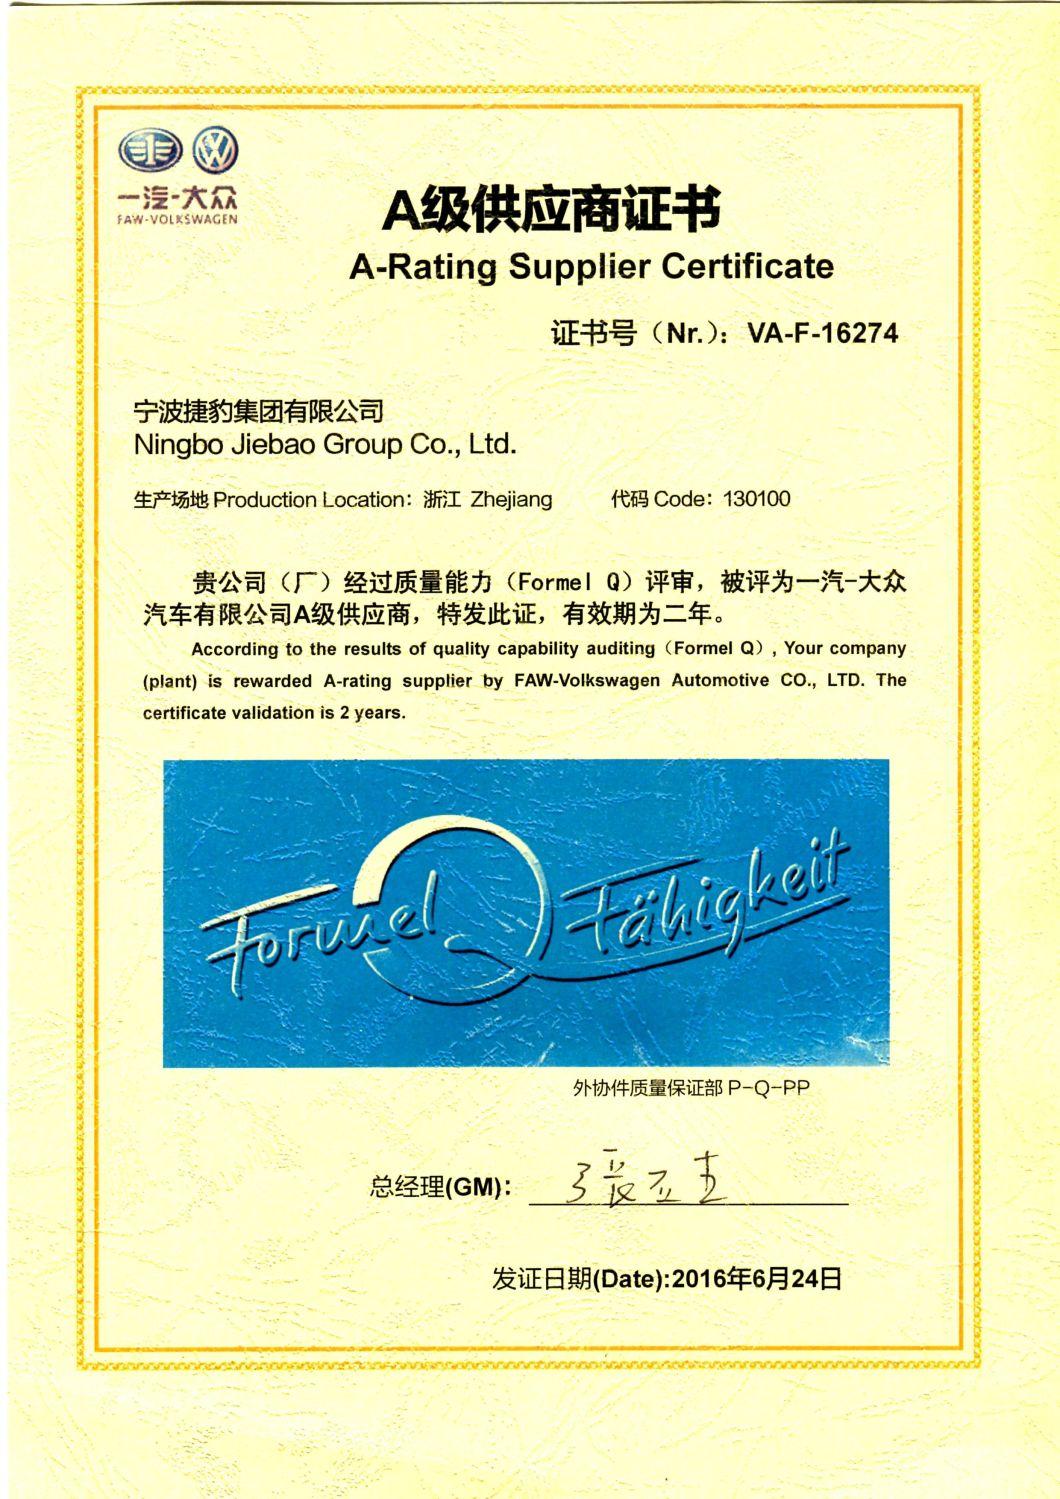 General Motors Belt Maker -Jiebao High Quality Neoprene Transmission Parts Fan Automotive Textile Garment Packaging Agricultural Machinery Synchronous Belt